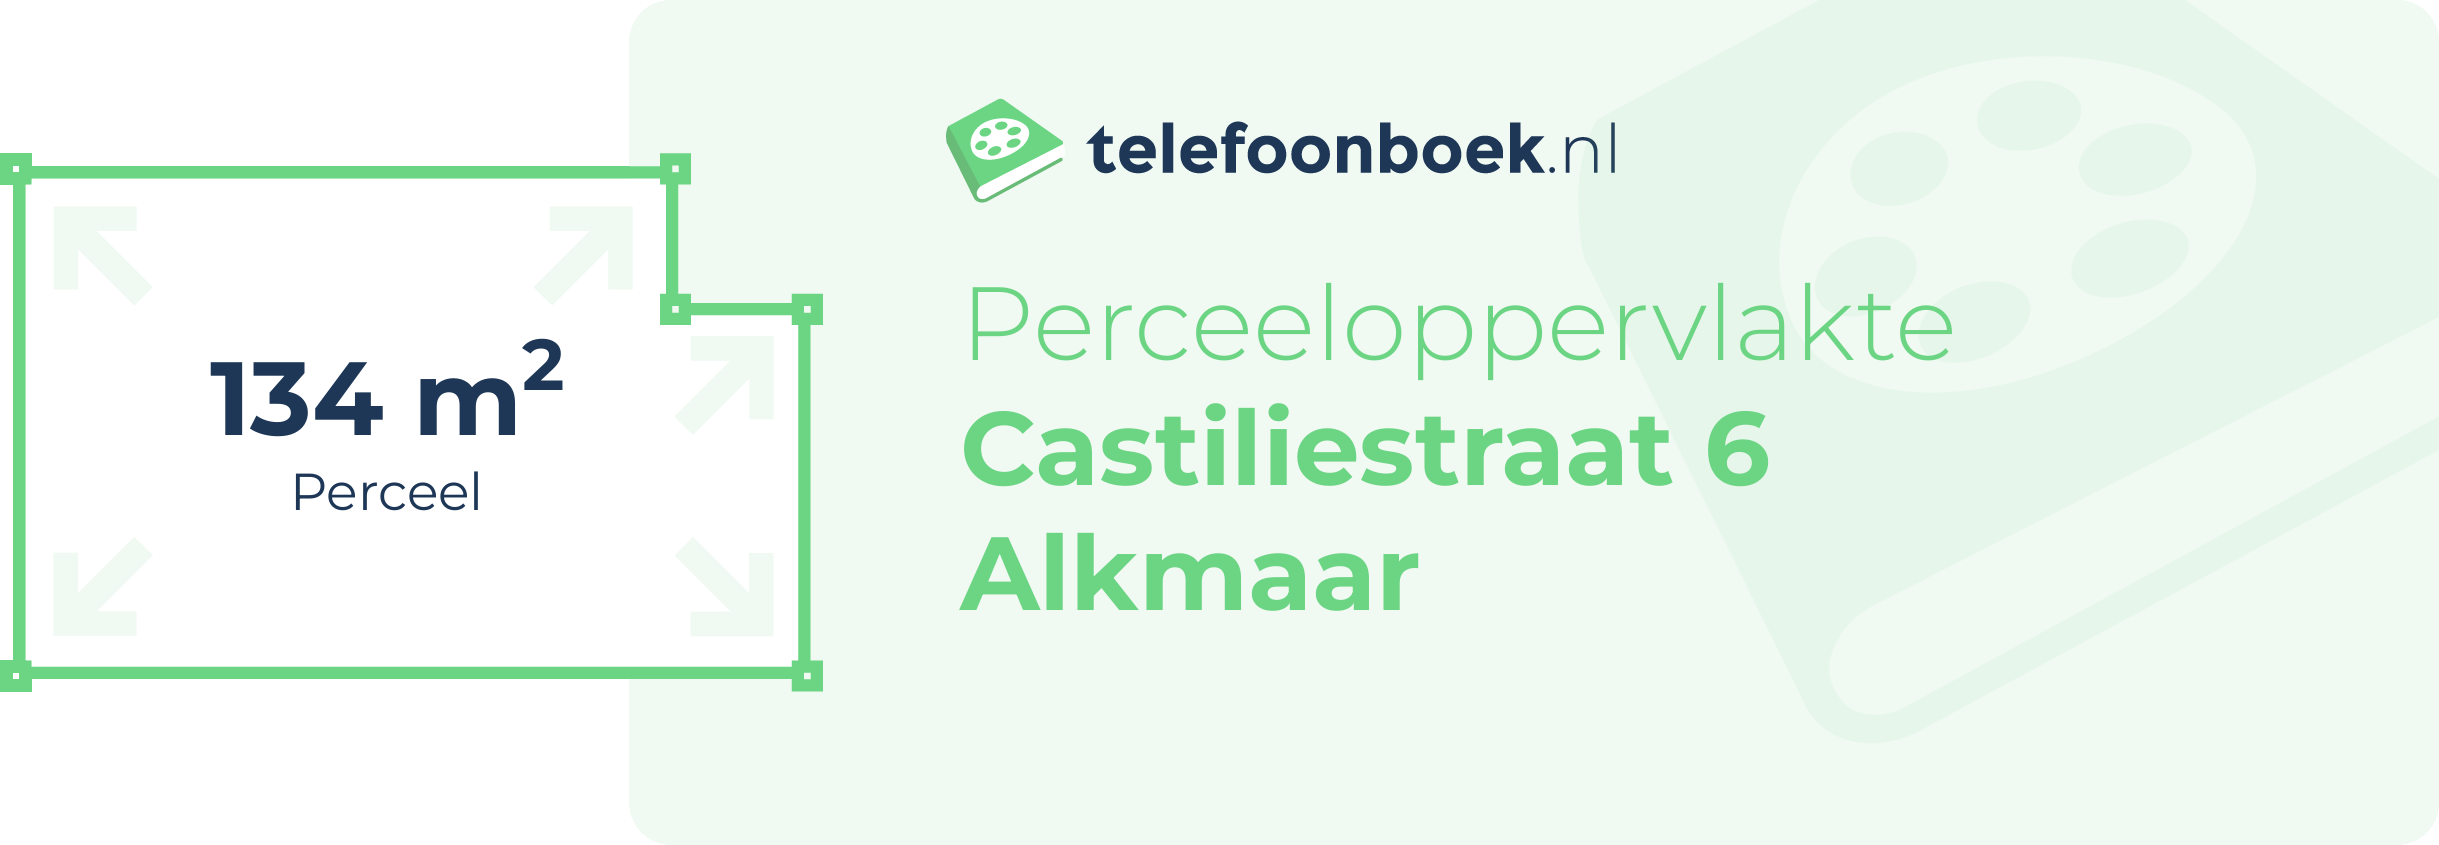 Perceeloppervlakte Castiliestraat 6 Alkmaar